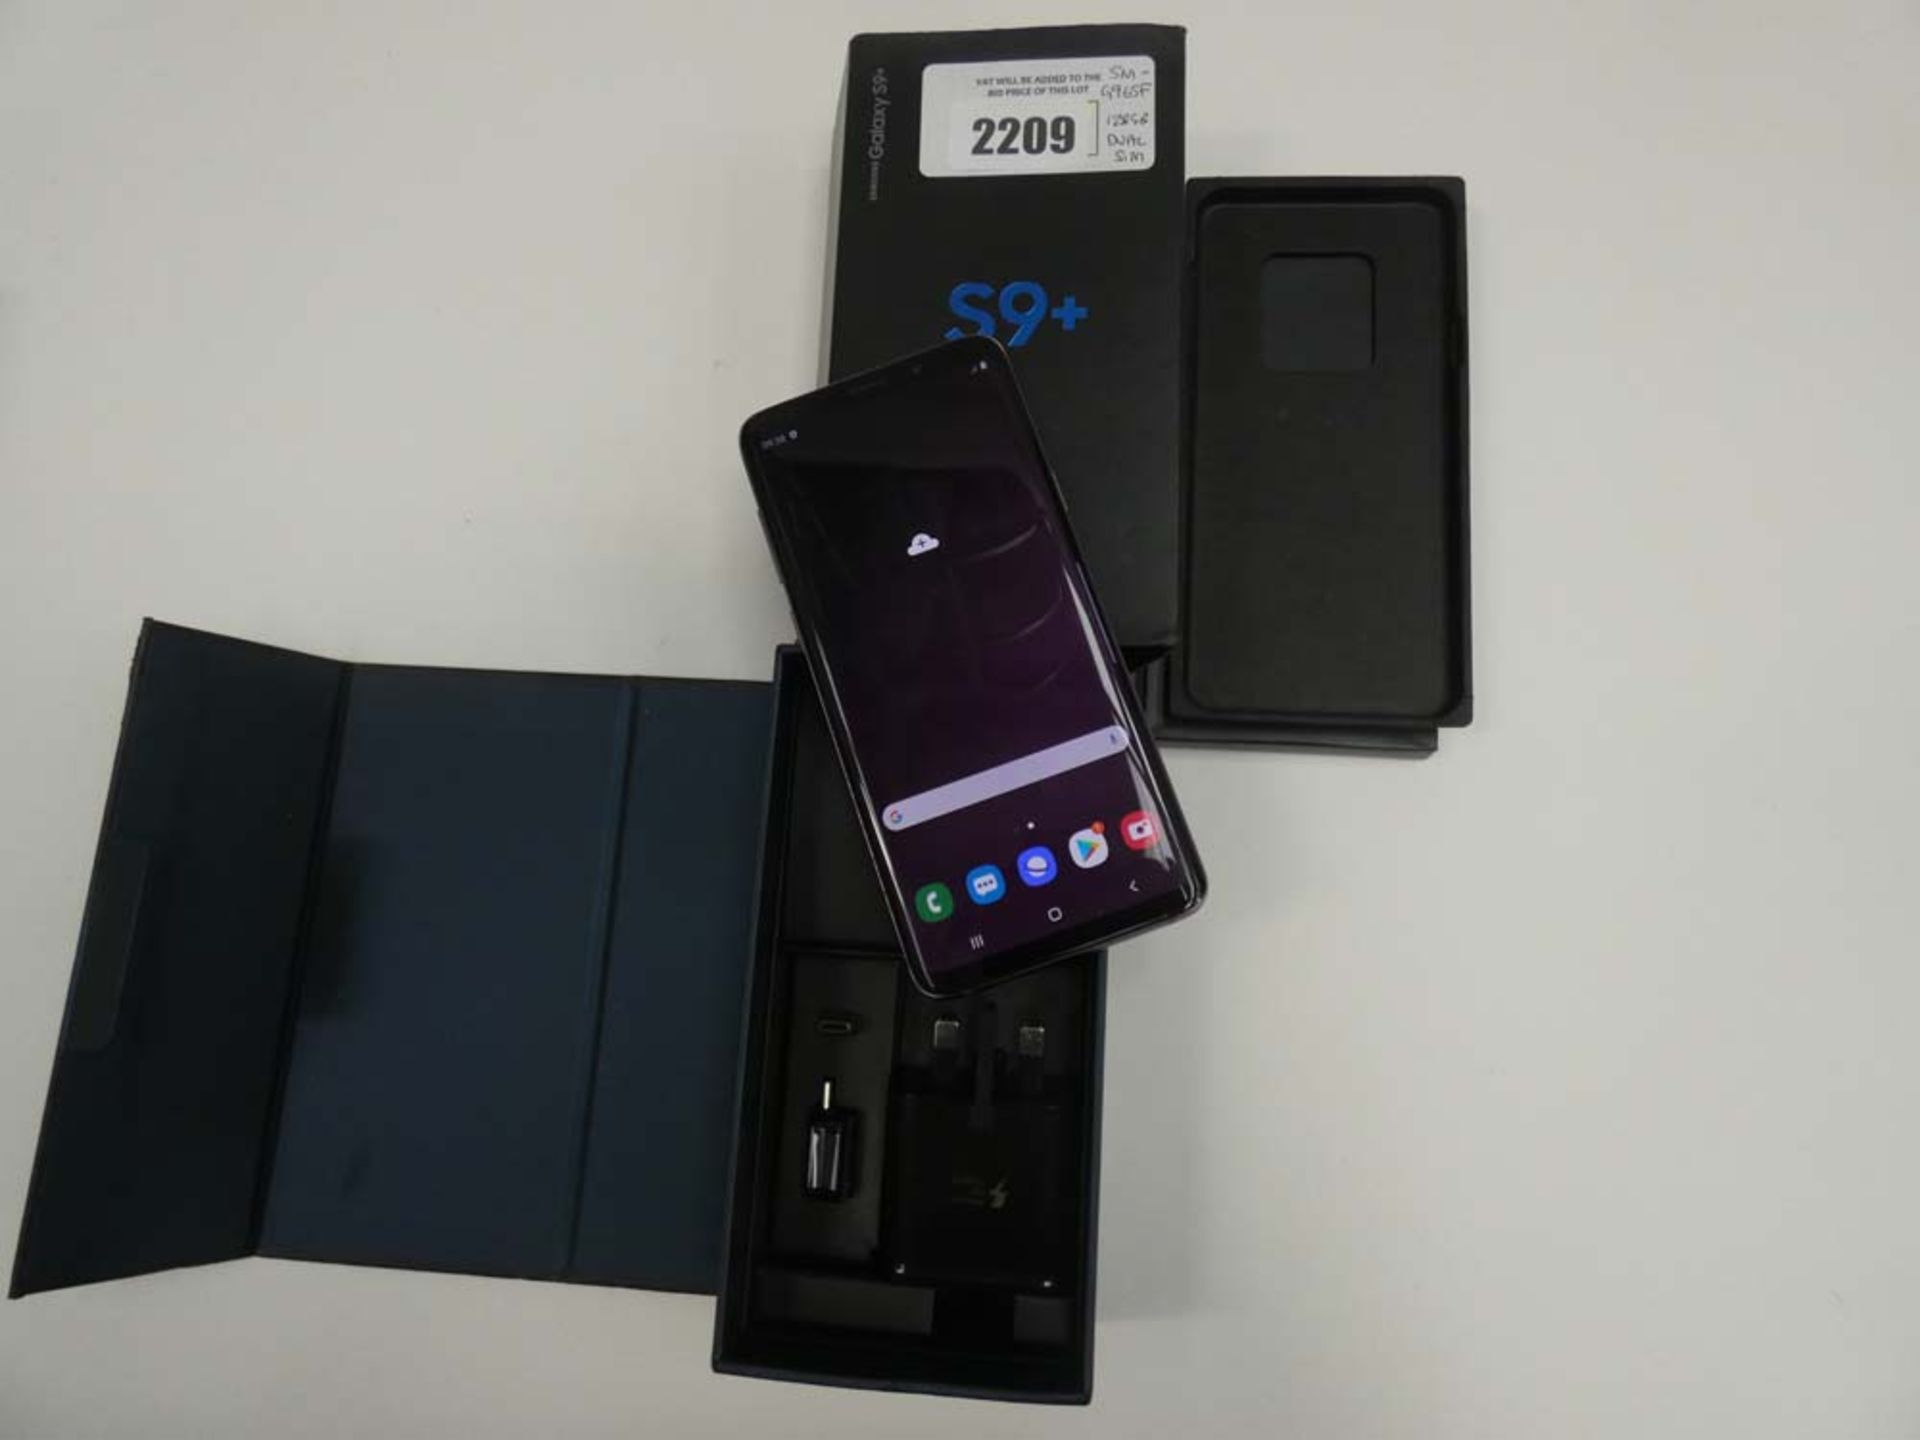 Samsung Galaxy S9+ 128GB SM-G965F smartphone in box